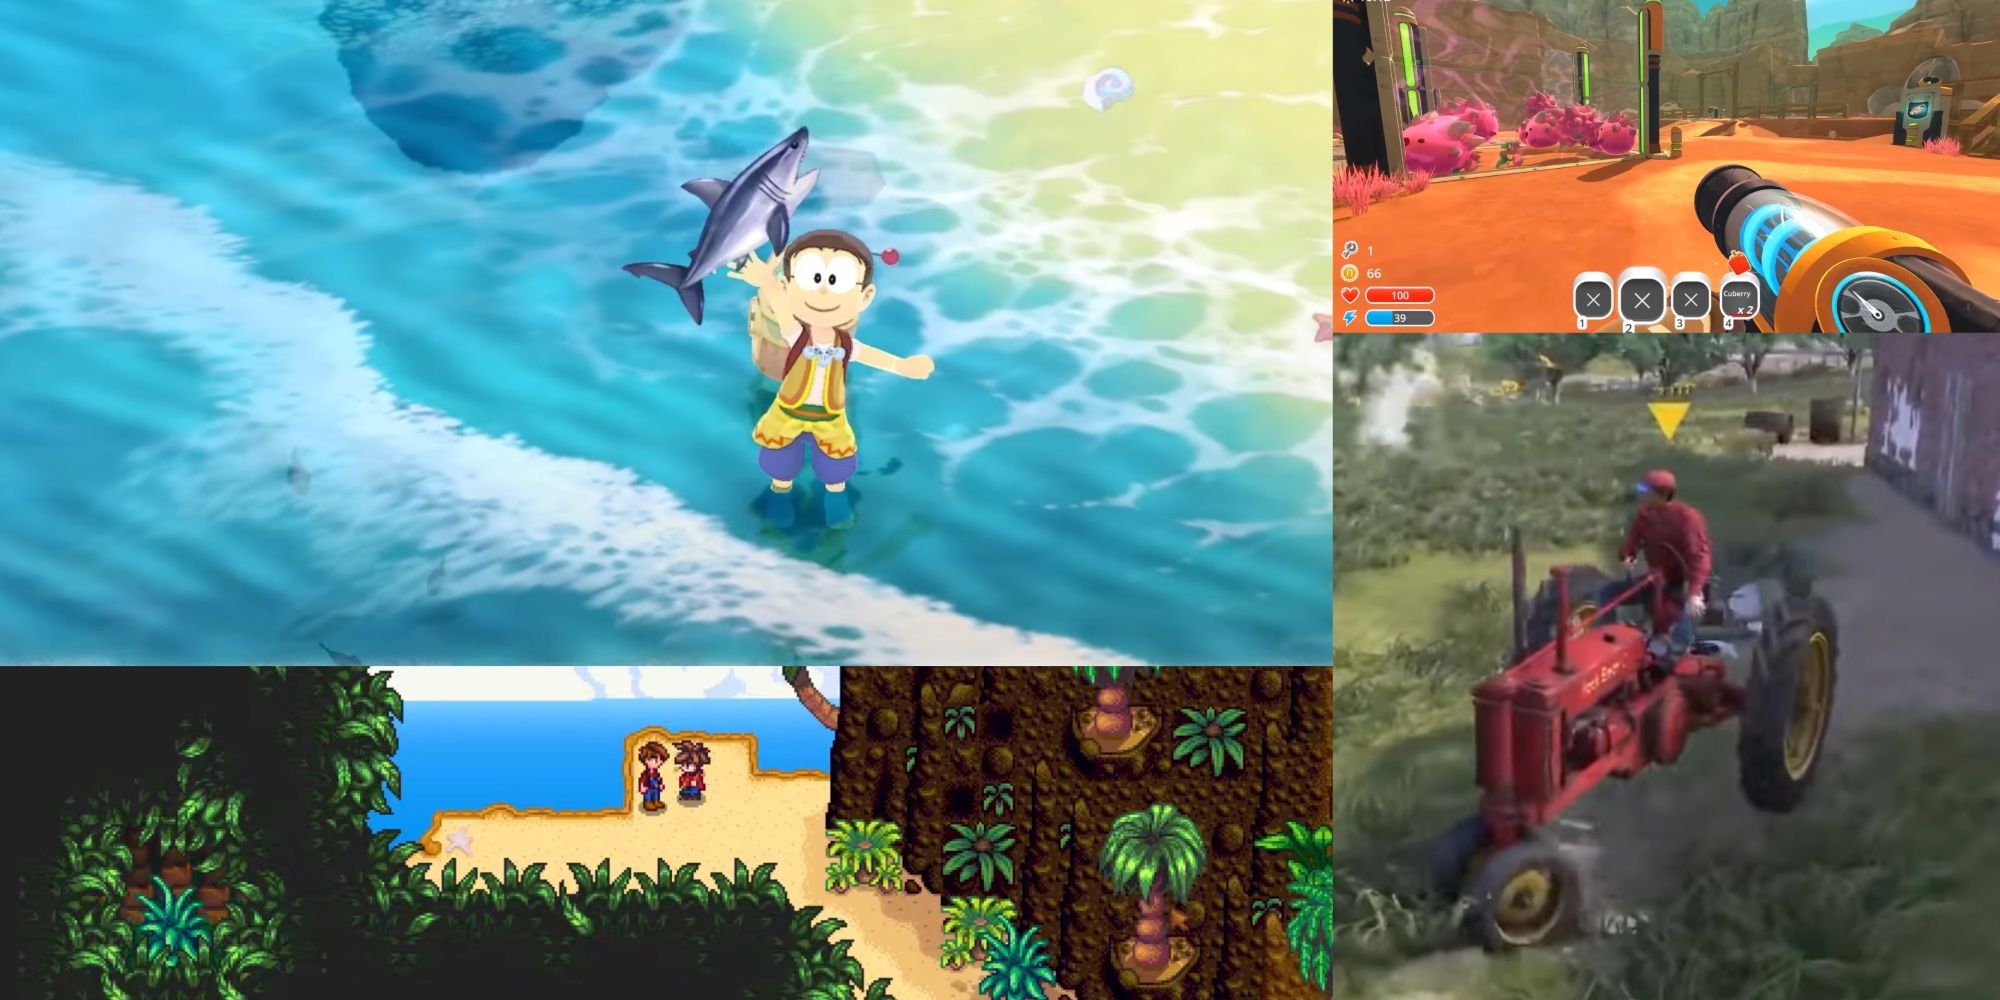 Collage of games: Doraemon, Farmer's dynasty, Slime Rancher, Stardew Valley